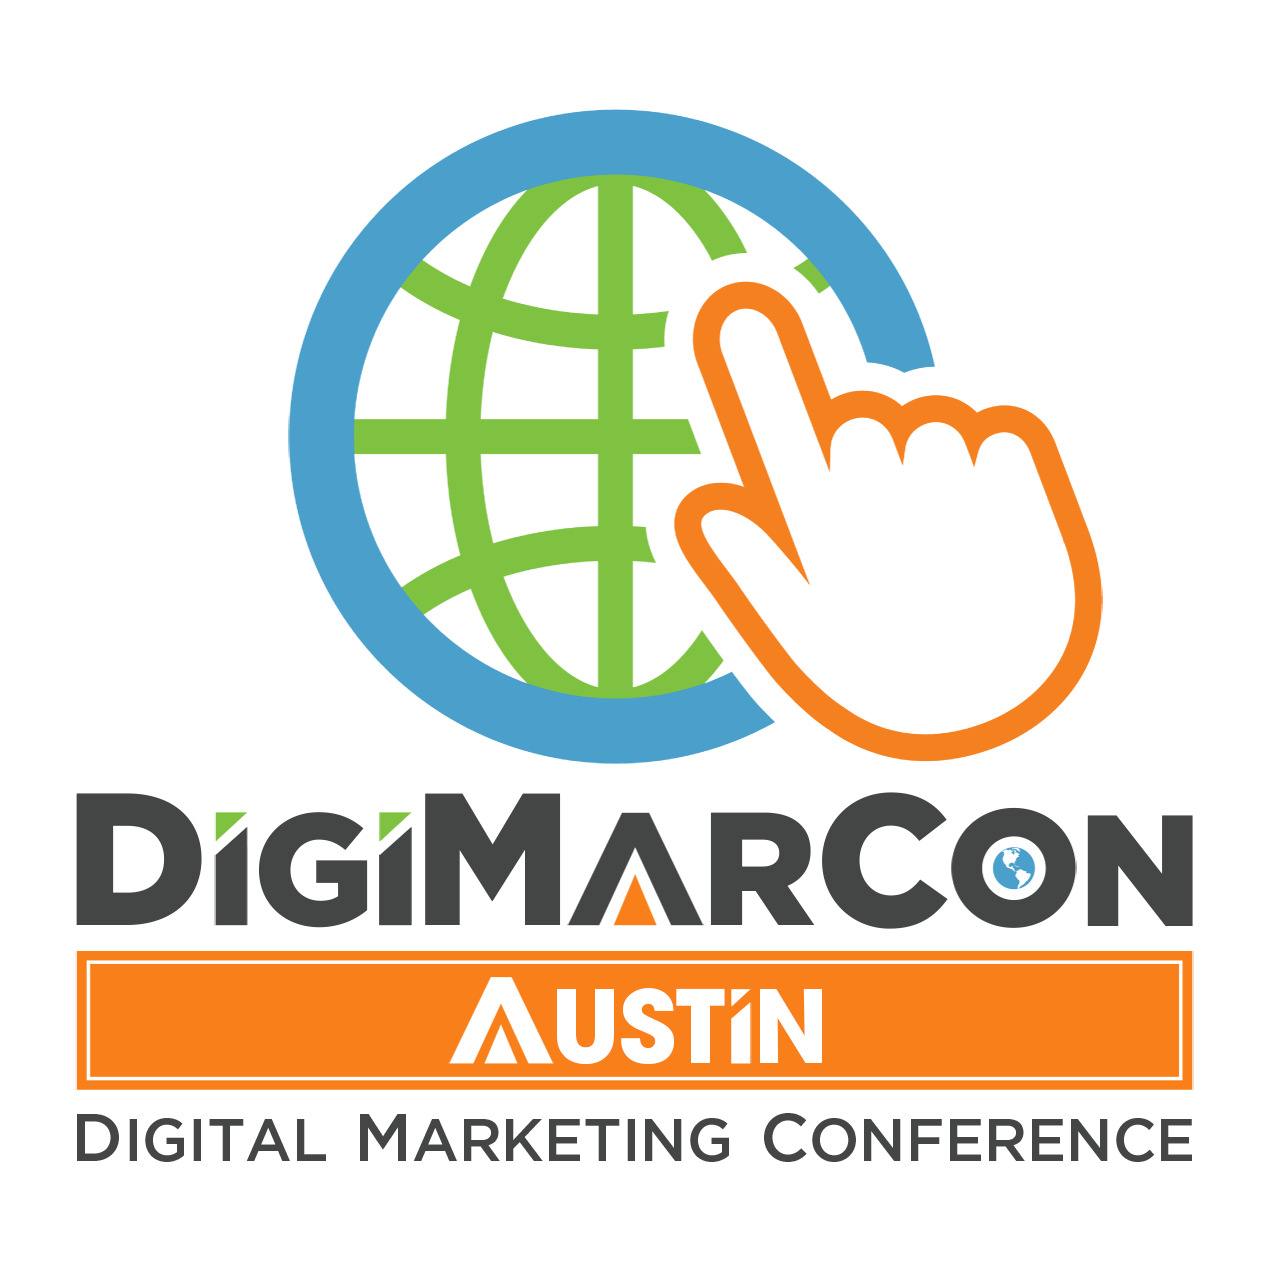 Austin Digital Marketing, Media & Advertising Conference